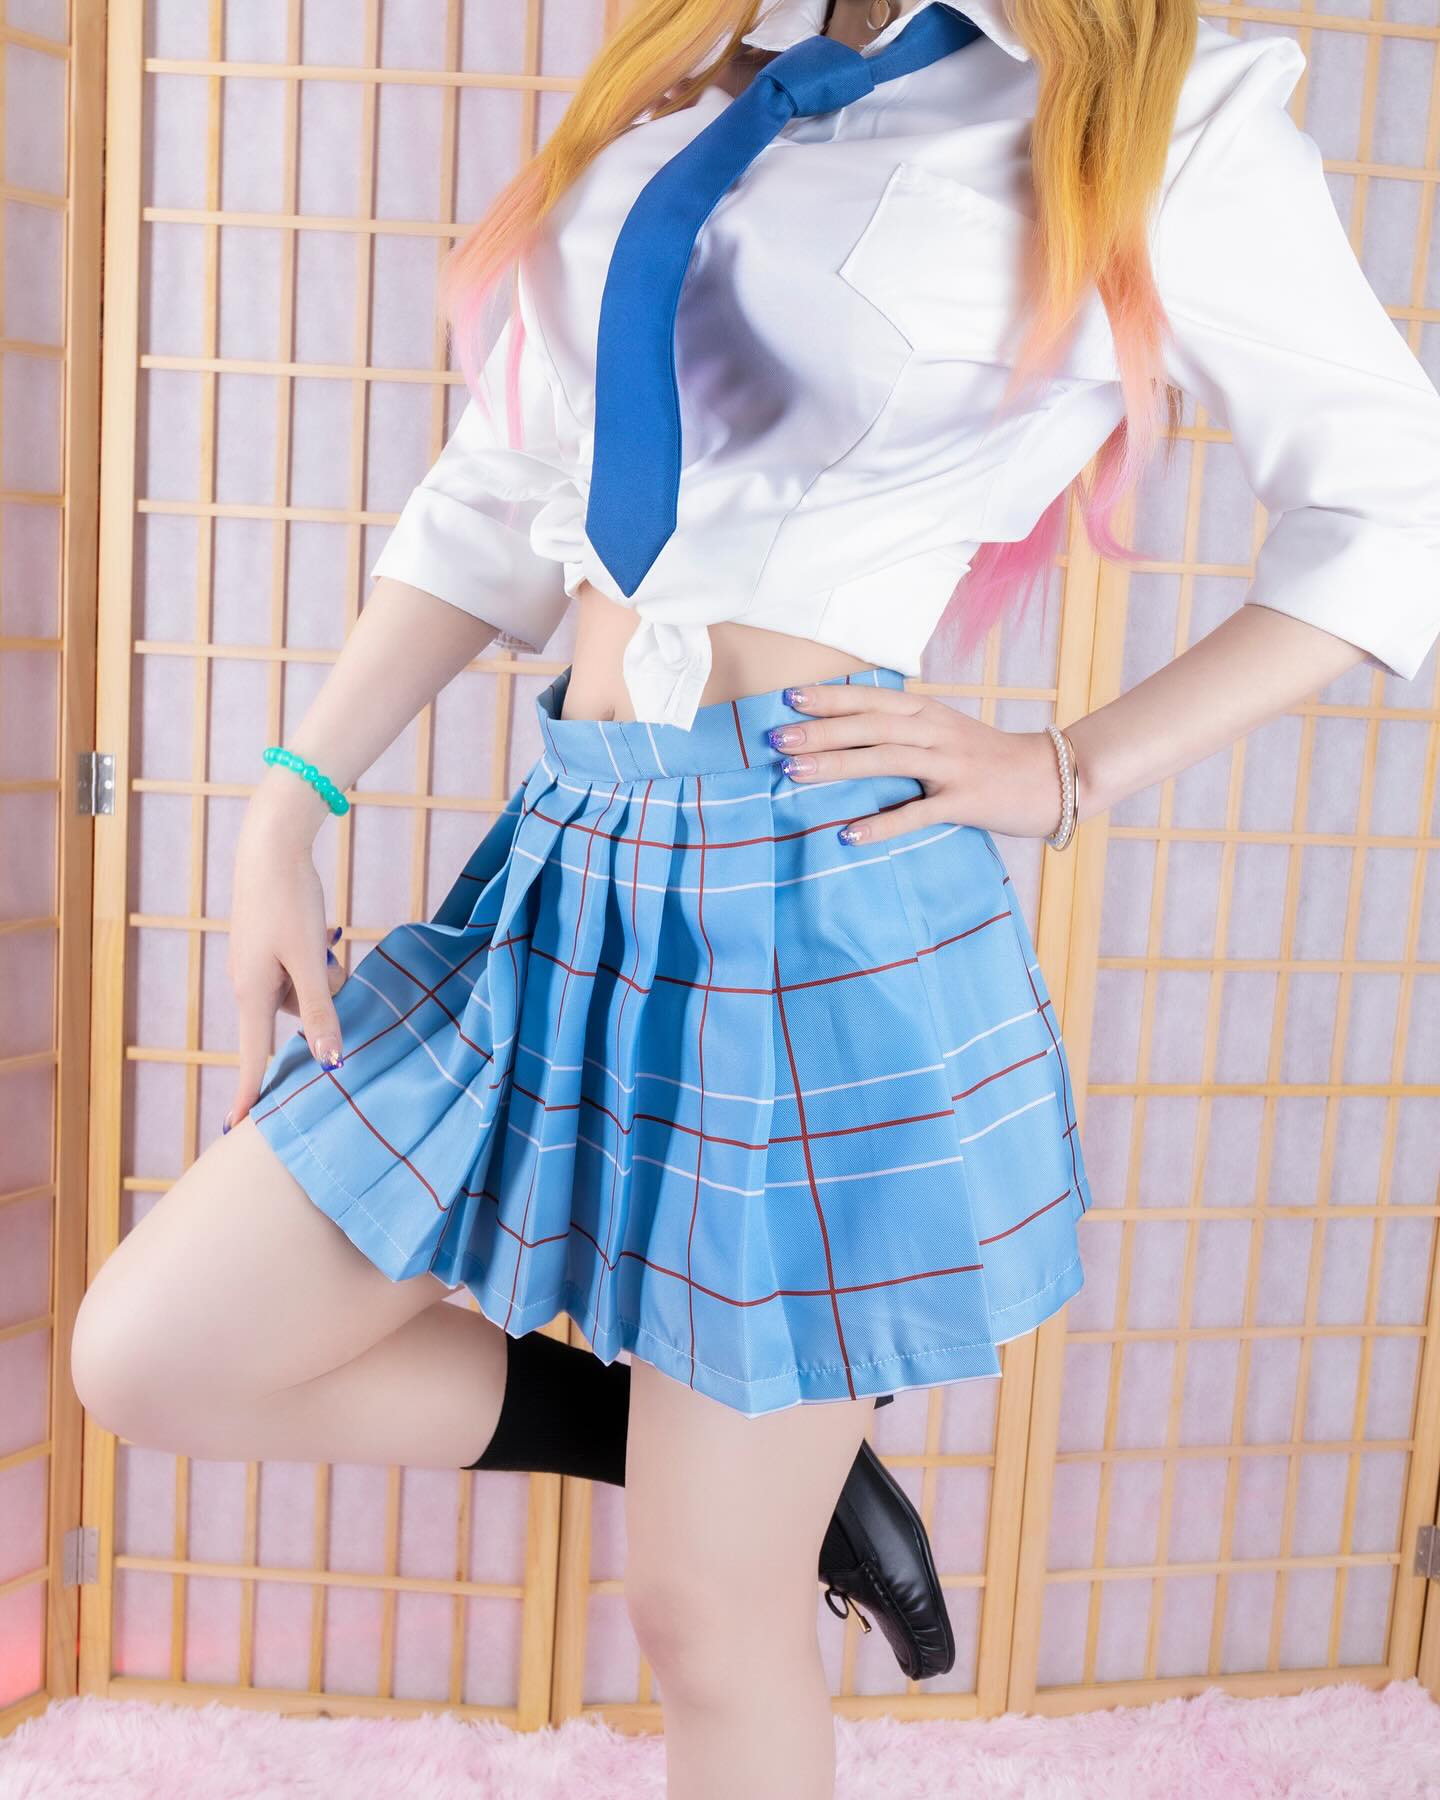 HBD to Marin!❤️
 La mejor cosplayer de parte de su cosplayer favorita 💕.
¿Qué cosplay de Marin te gusta más? Los leo abajito⬇️
•
•
•
#fyp #cosplay #cosplayer #marin #kitagawa #sonobisquedollwakoiwosuru #japon #japan #anime #animegirl #otaku #otakugirl #waifu #waifumaterial #birthday #gyaru